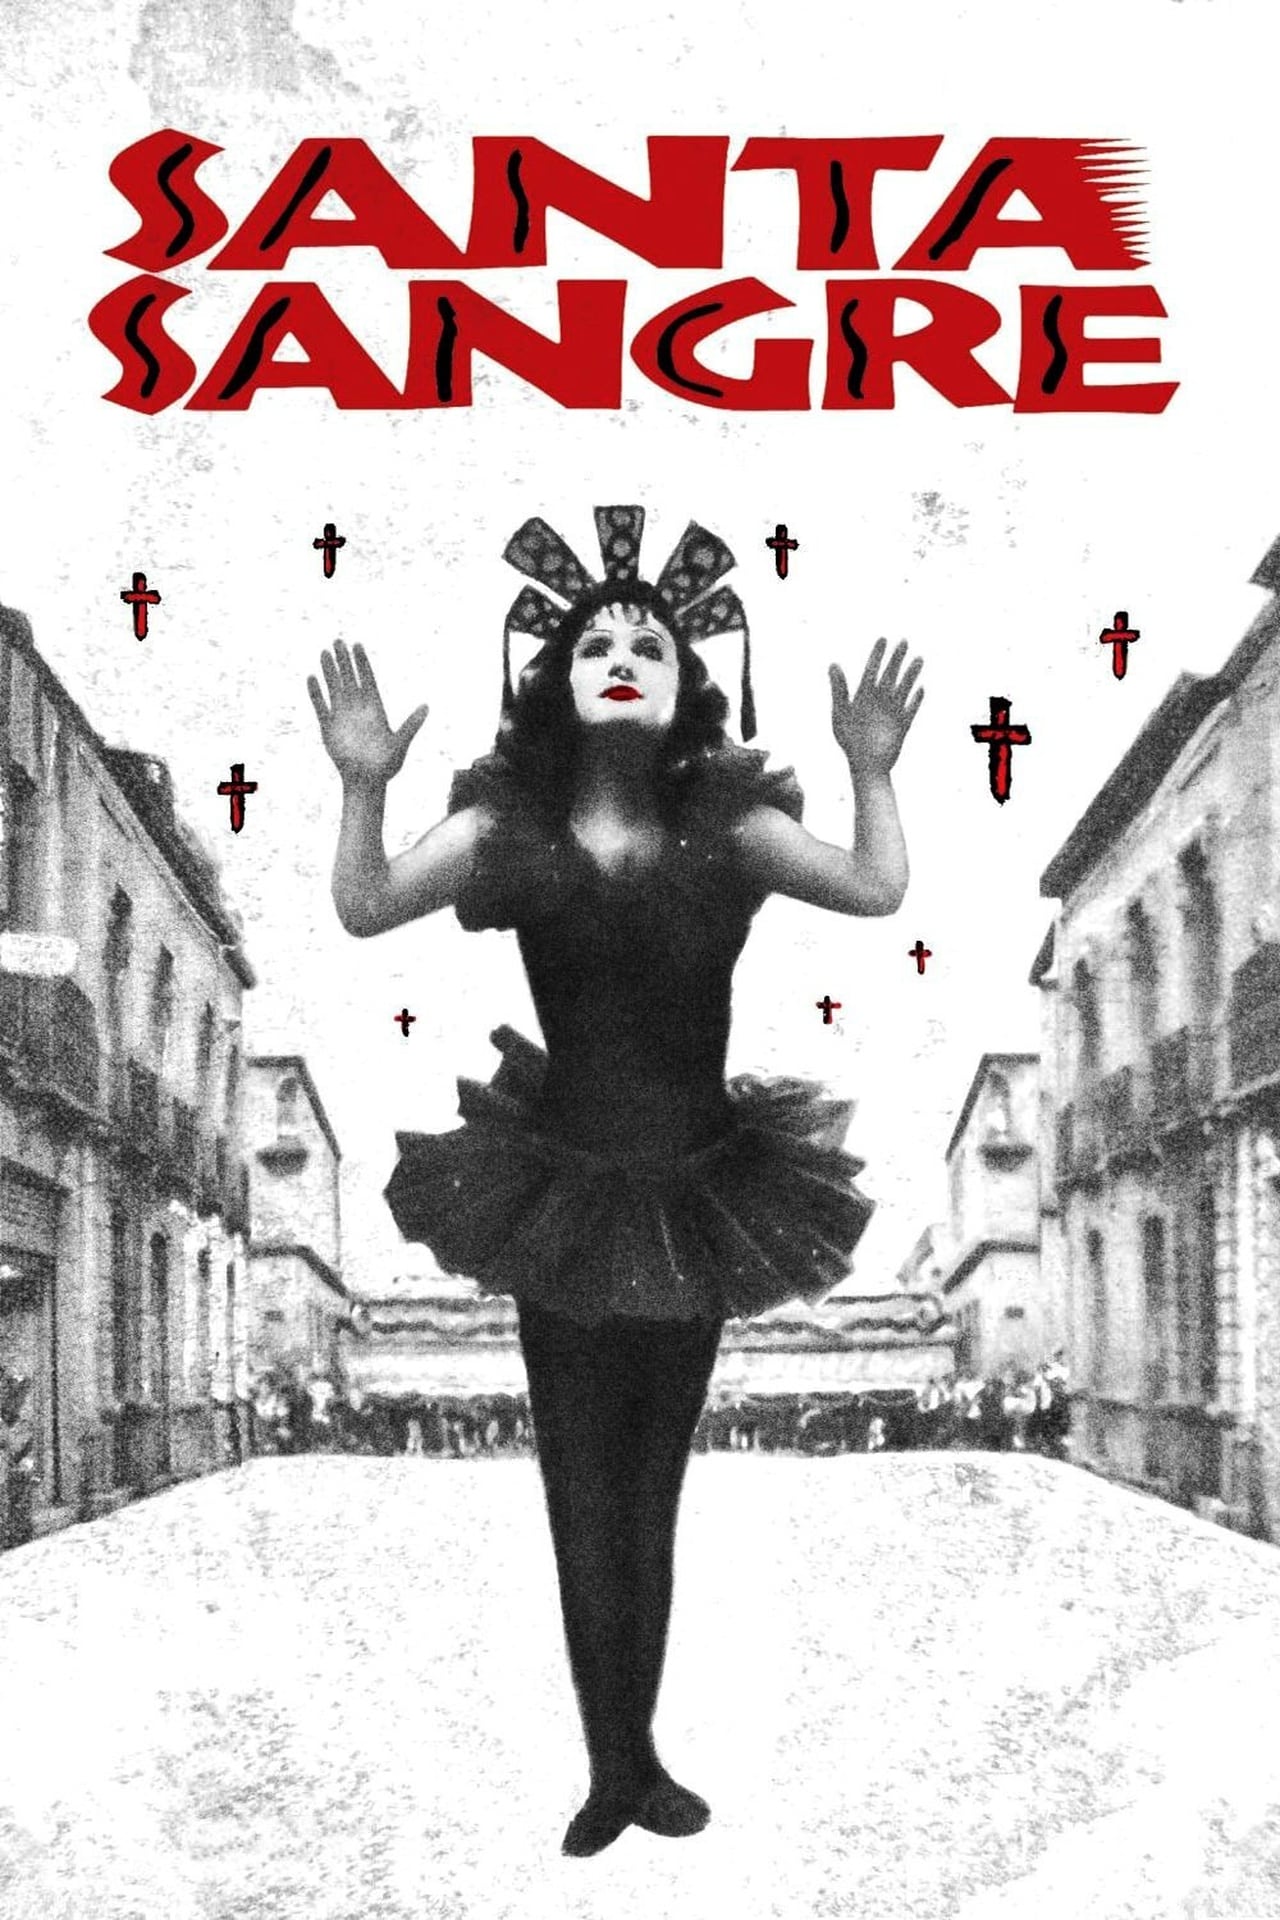 Santa Sangre poster